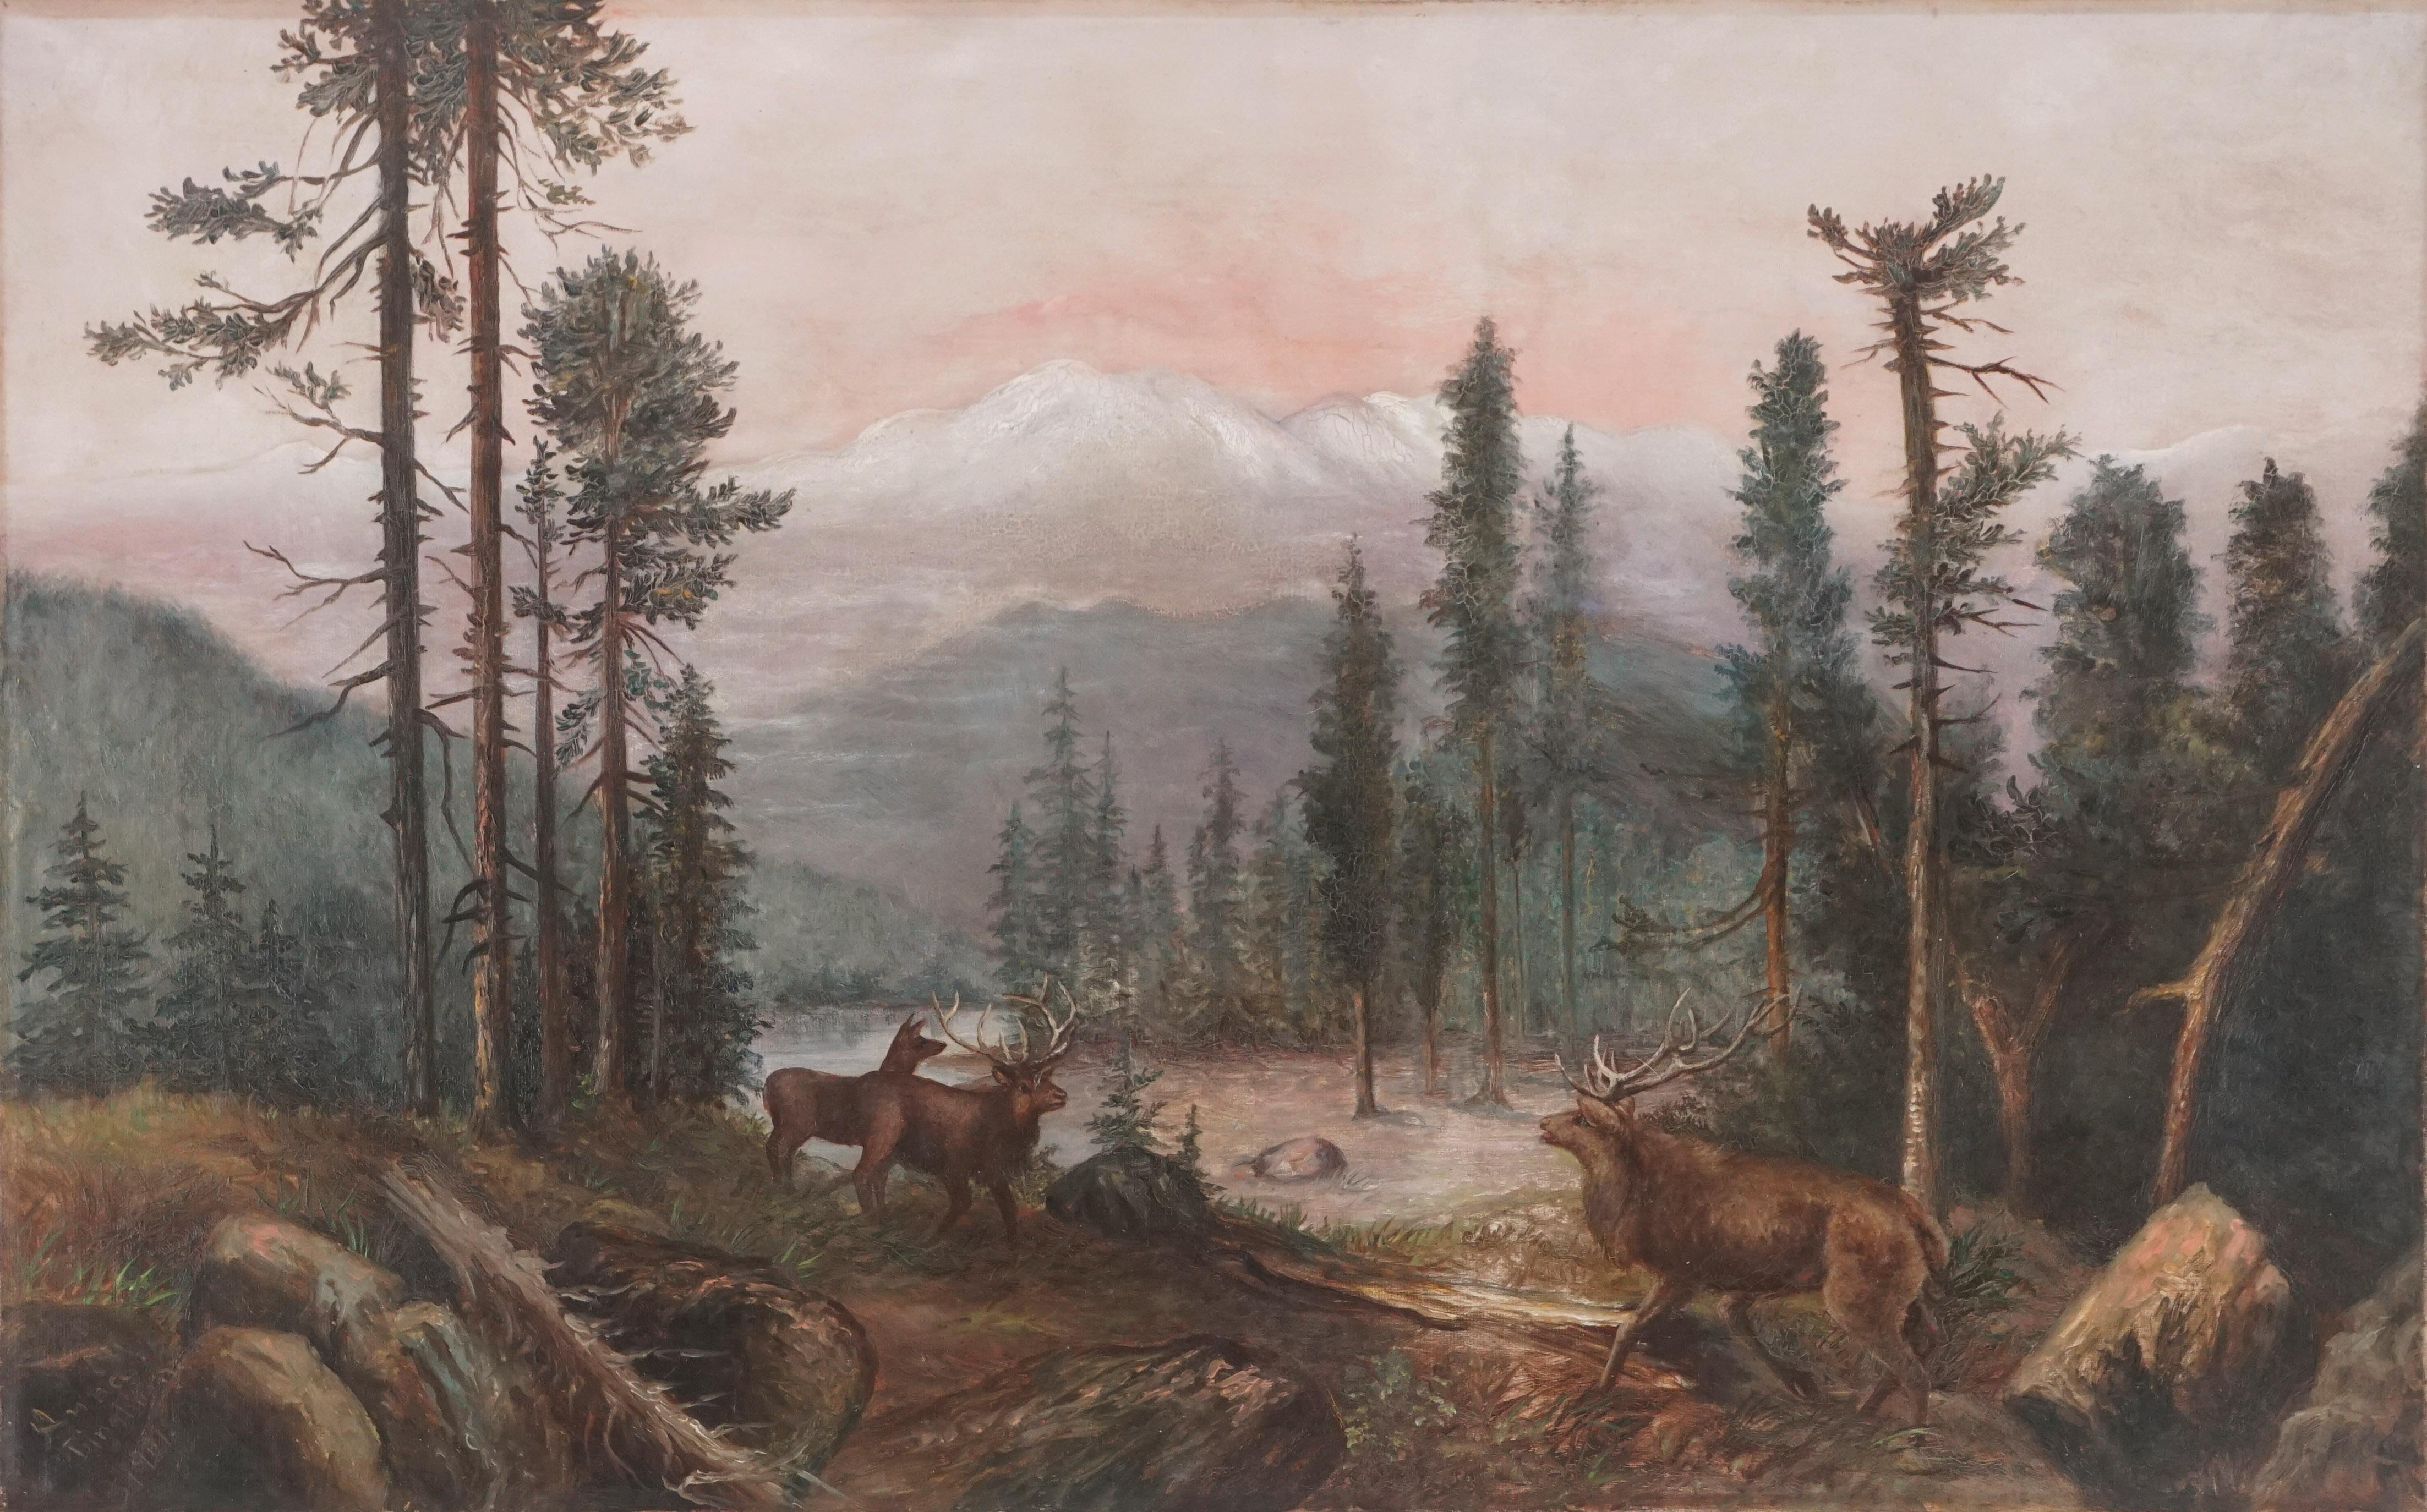 Anna Carver Bingham Landscape Painting - Turn of 20th Century Mt. Shasta Landscape with Deer